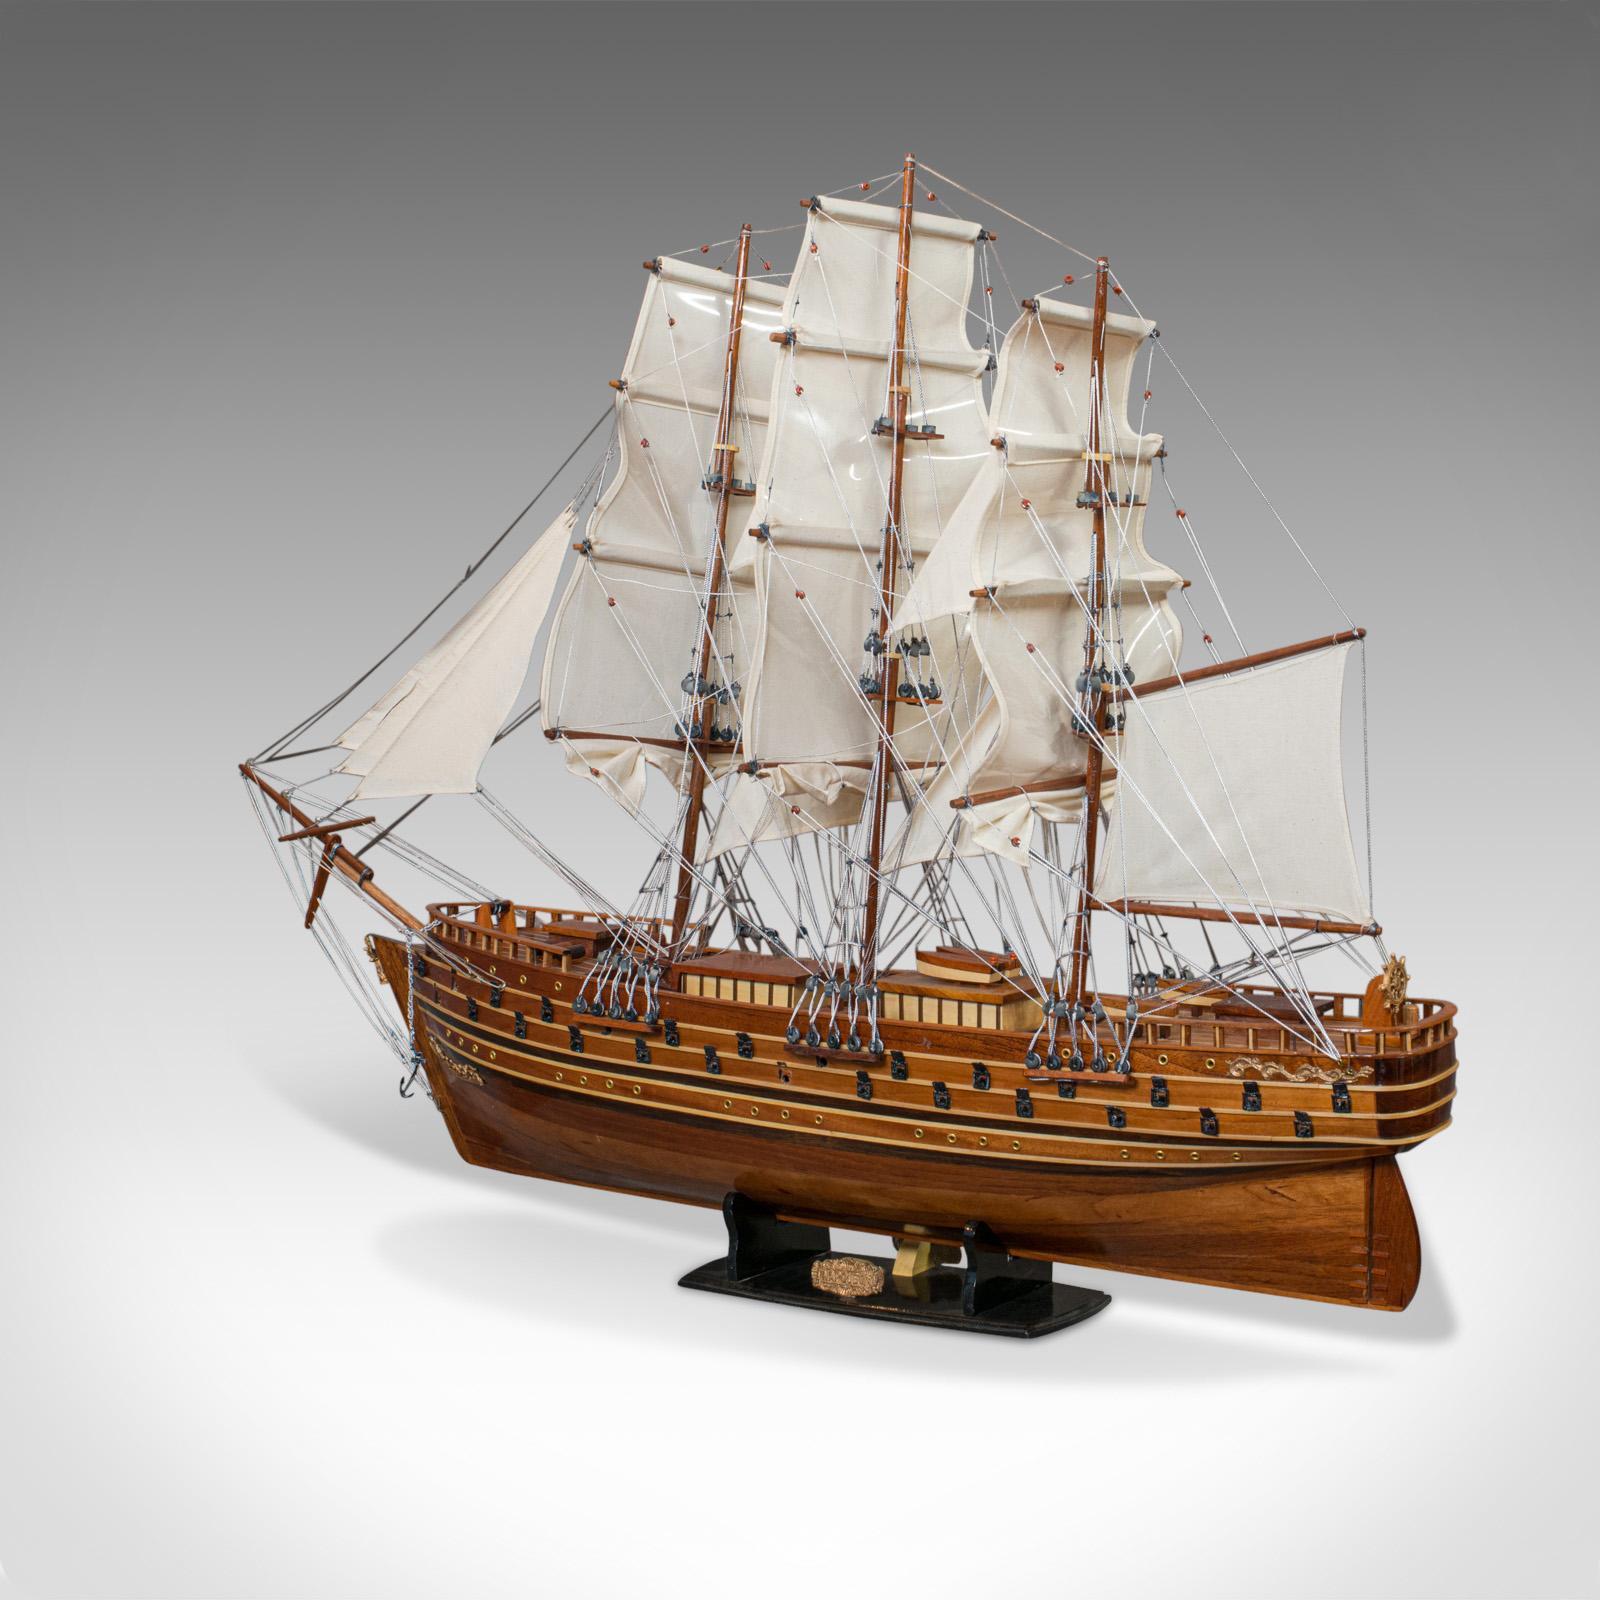 how big was napoleon's ship